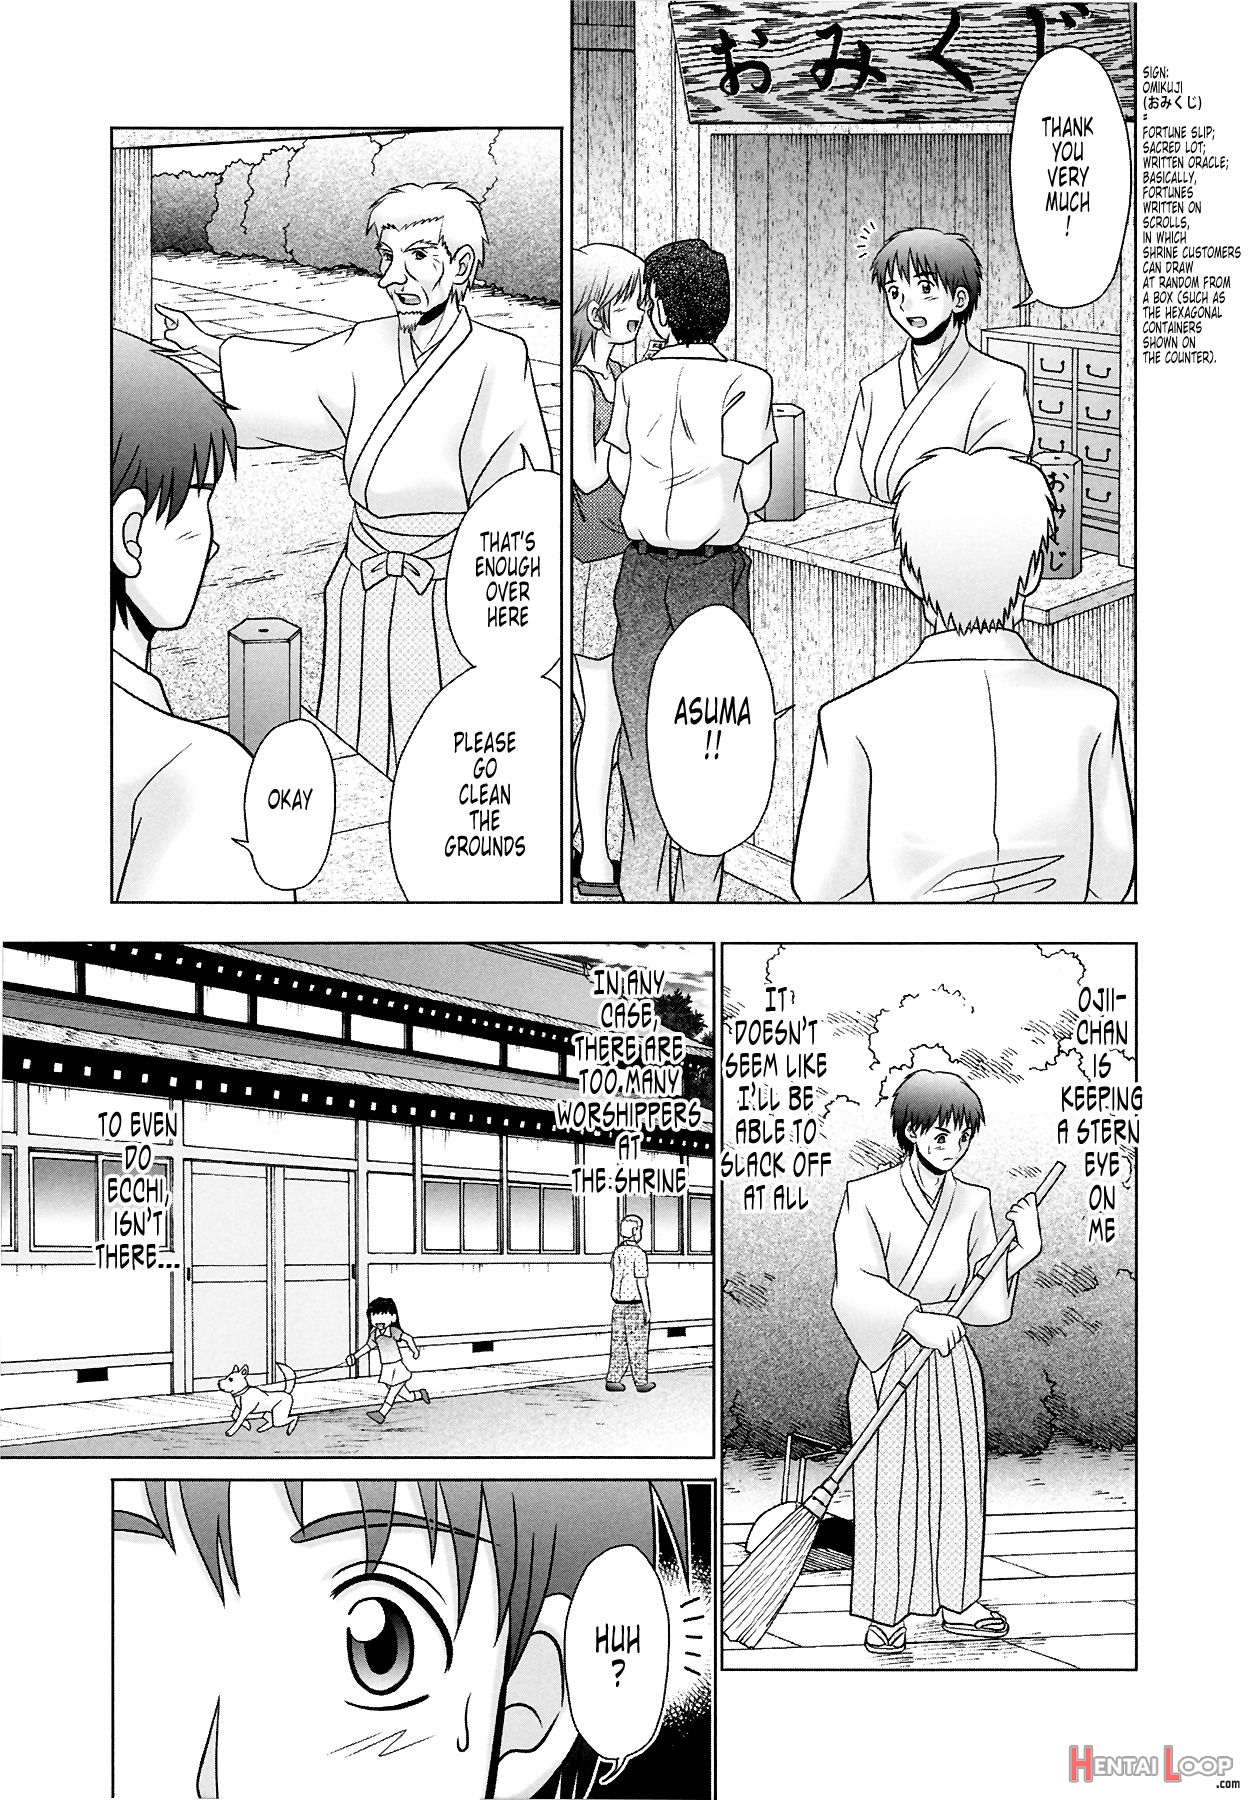 Tsukumimi 1&2 page 271